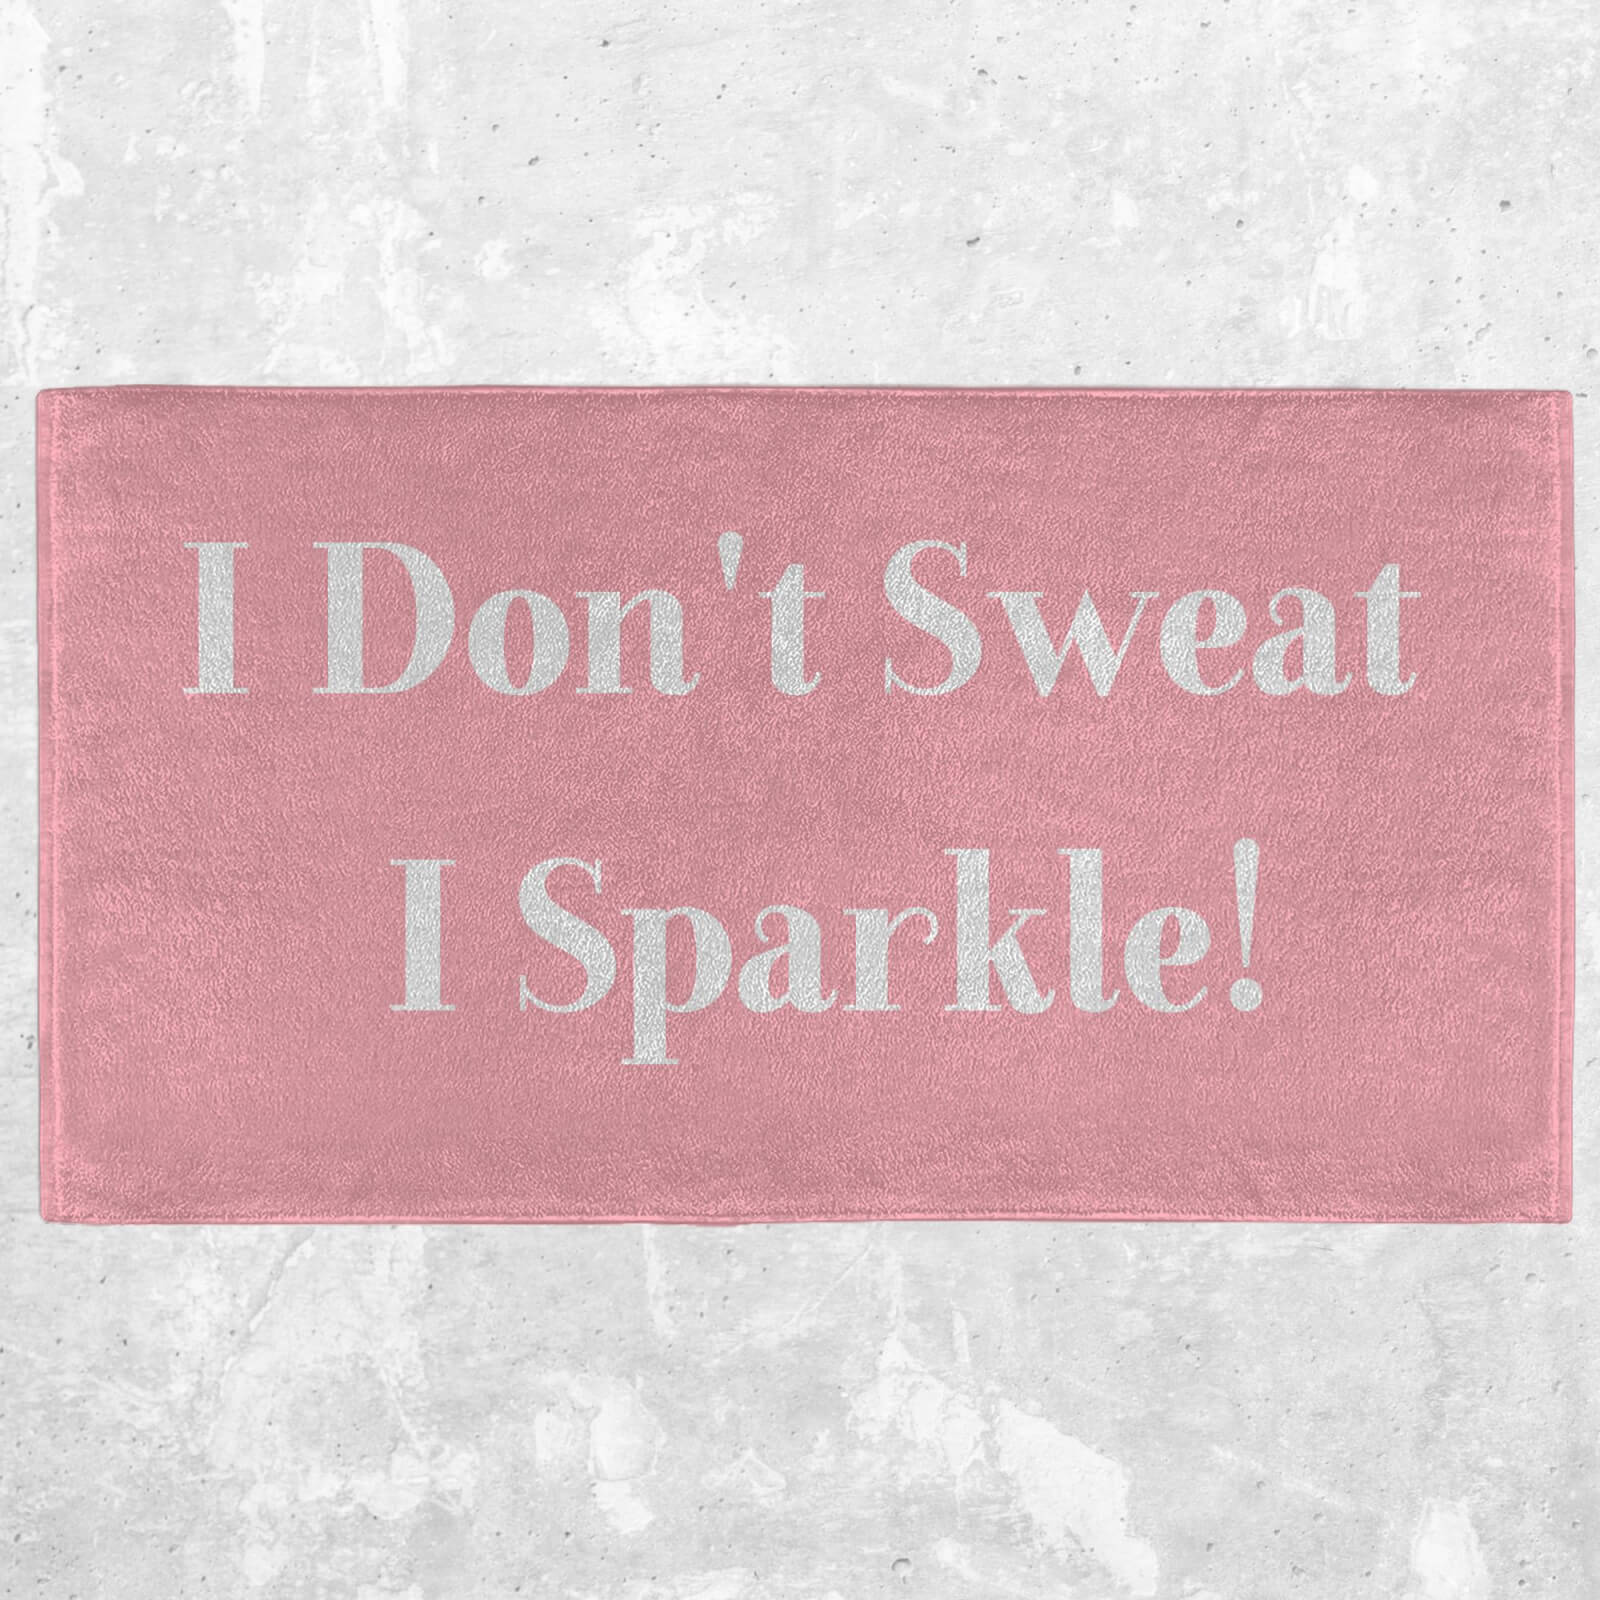 I Don't Sweat I Sparkle! Fitness Towel